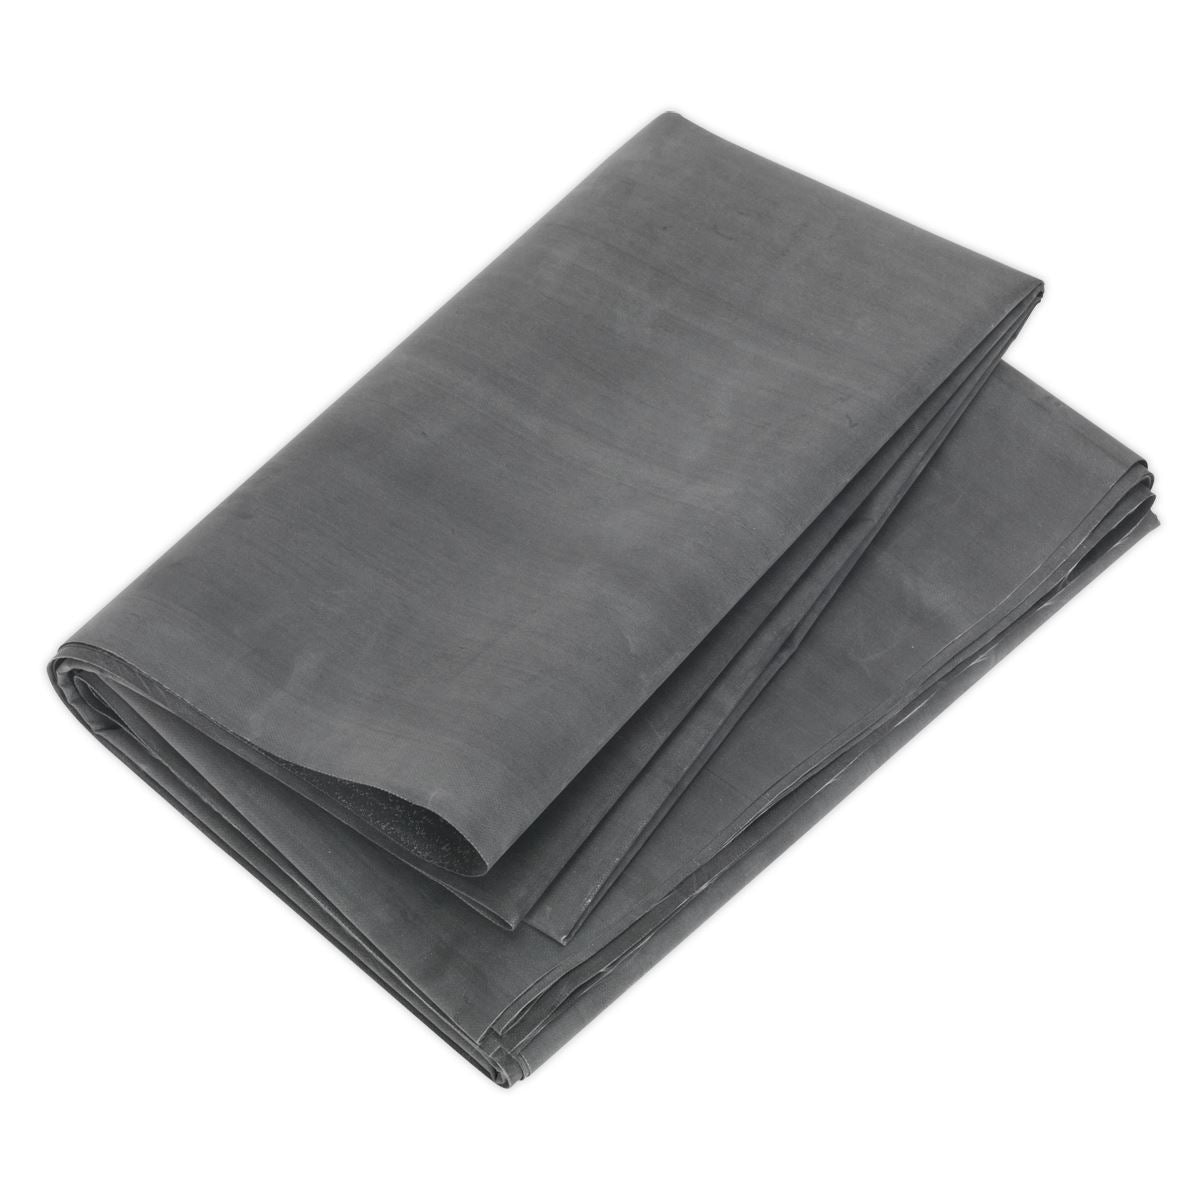 Sealey Spark Proof Welding Blanket 1800mm x 1300mm